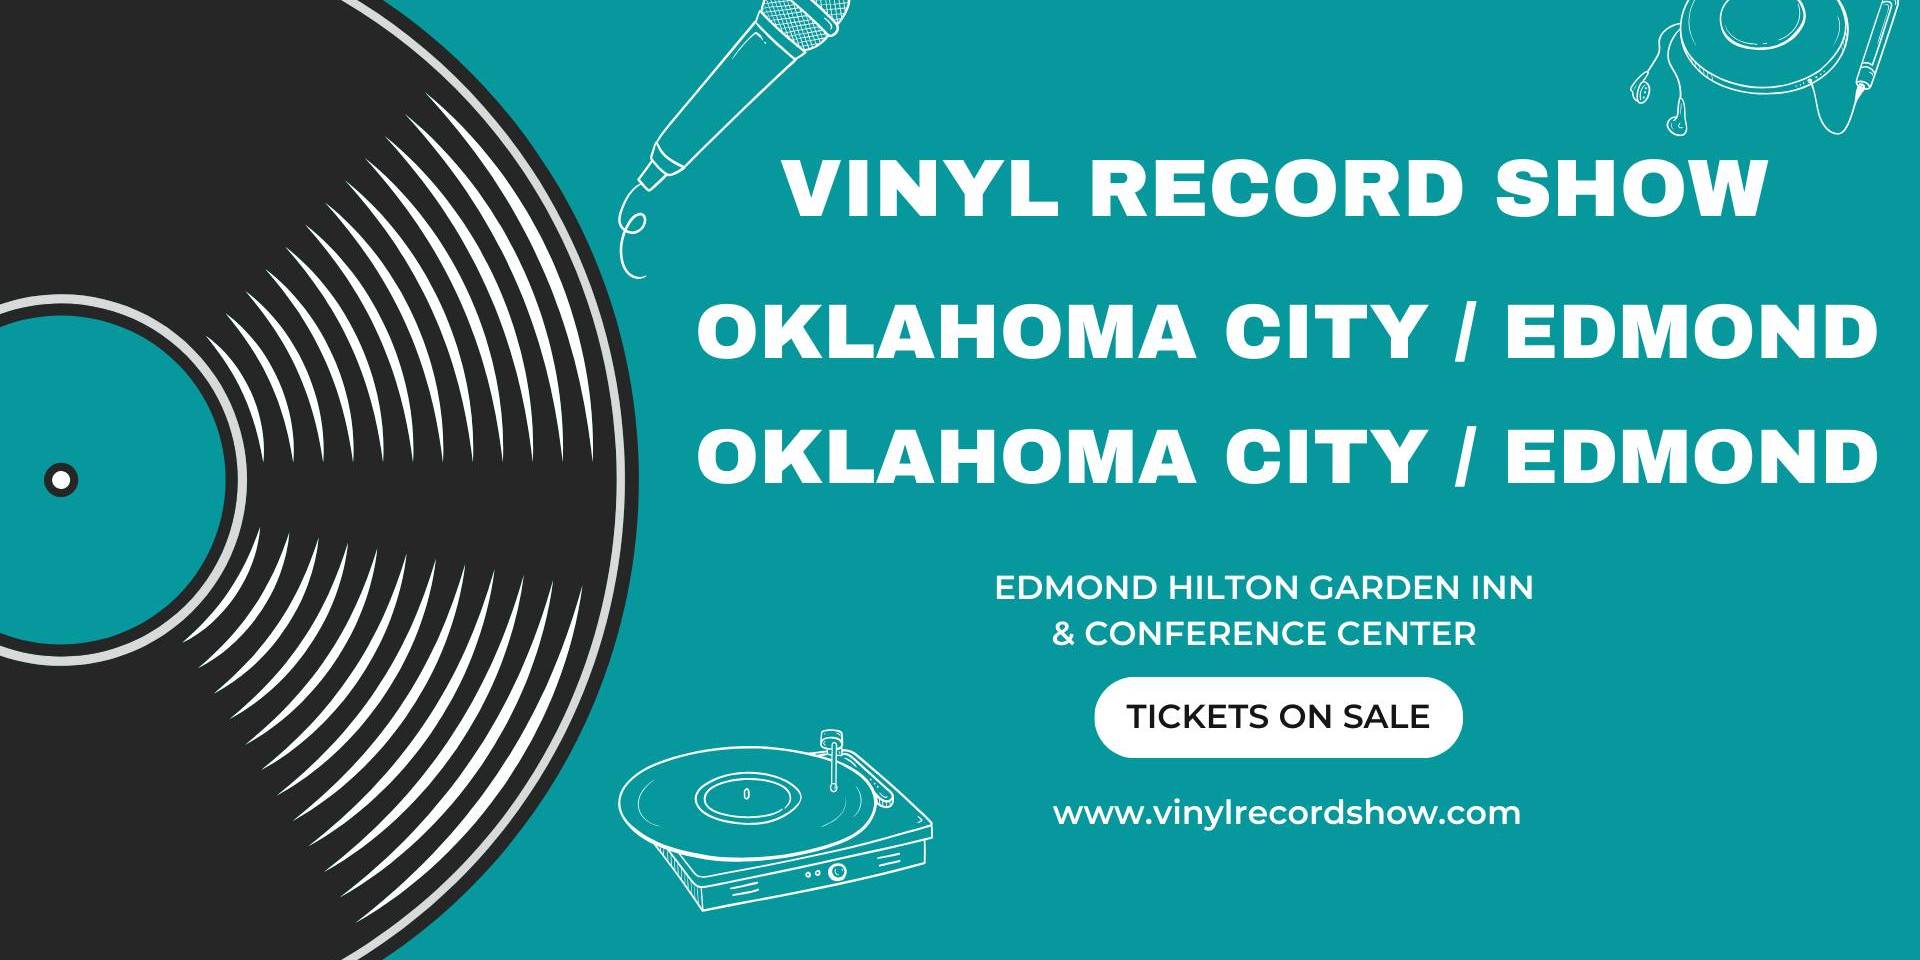 Vinyl Record Show of Oklahoma City, OK / Edmond, OK promotional image